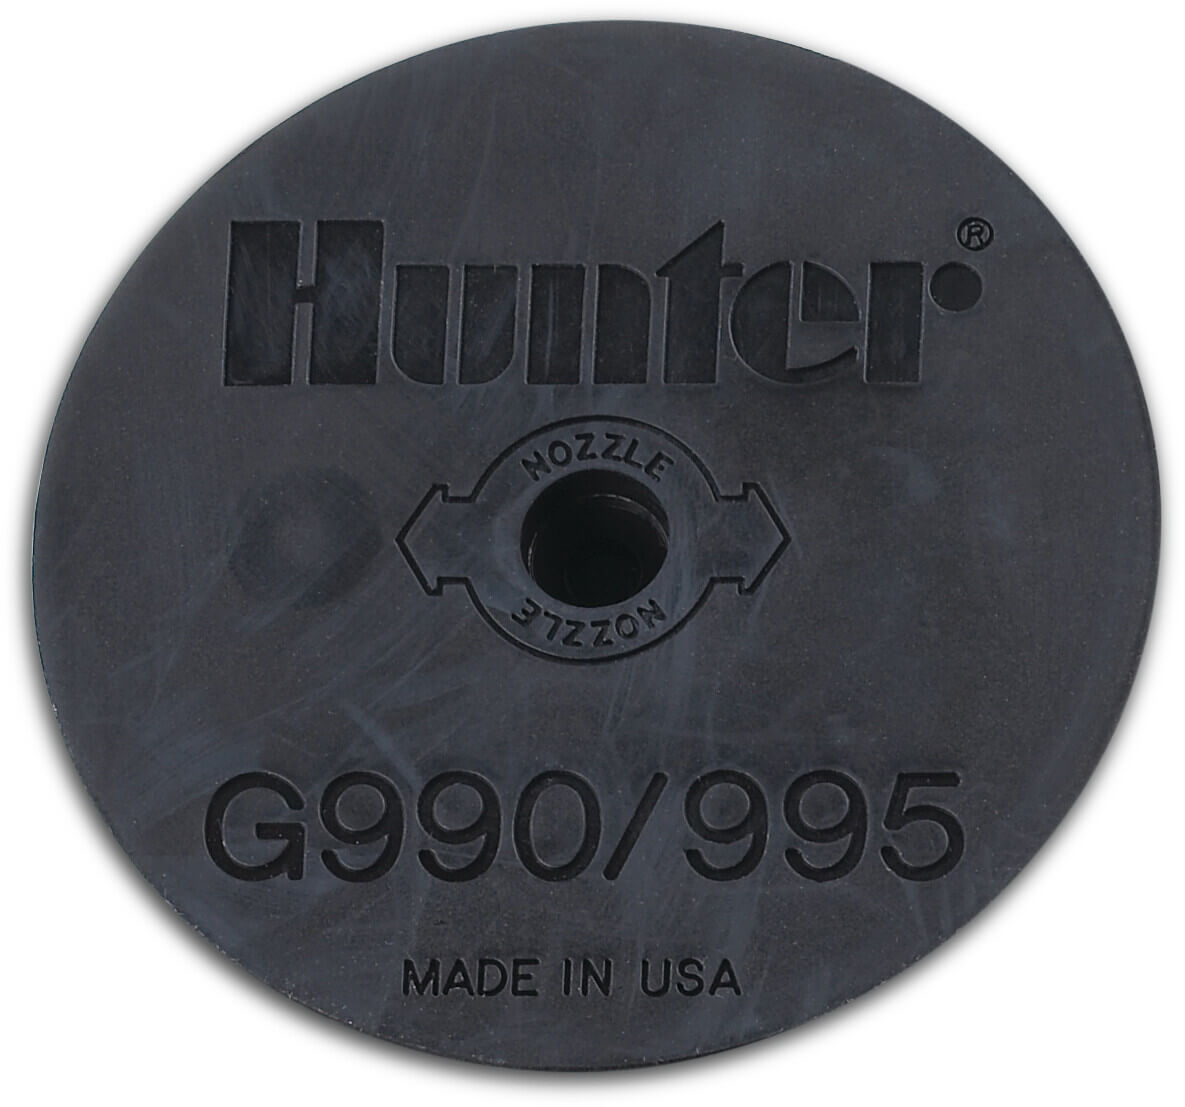 Hunter Rubber cover for G-990 377905